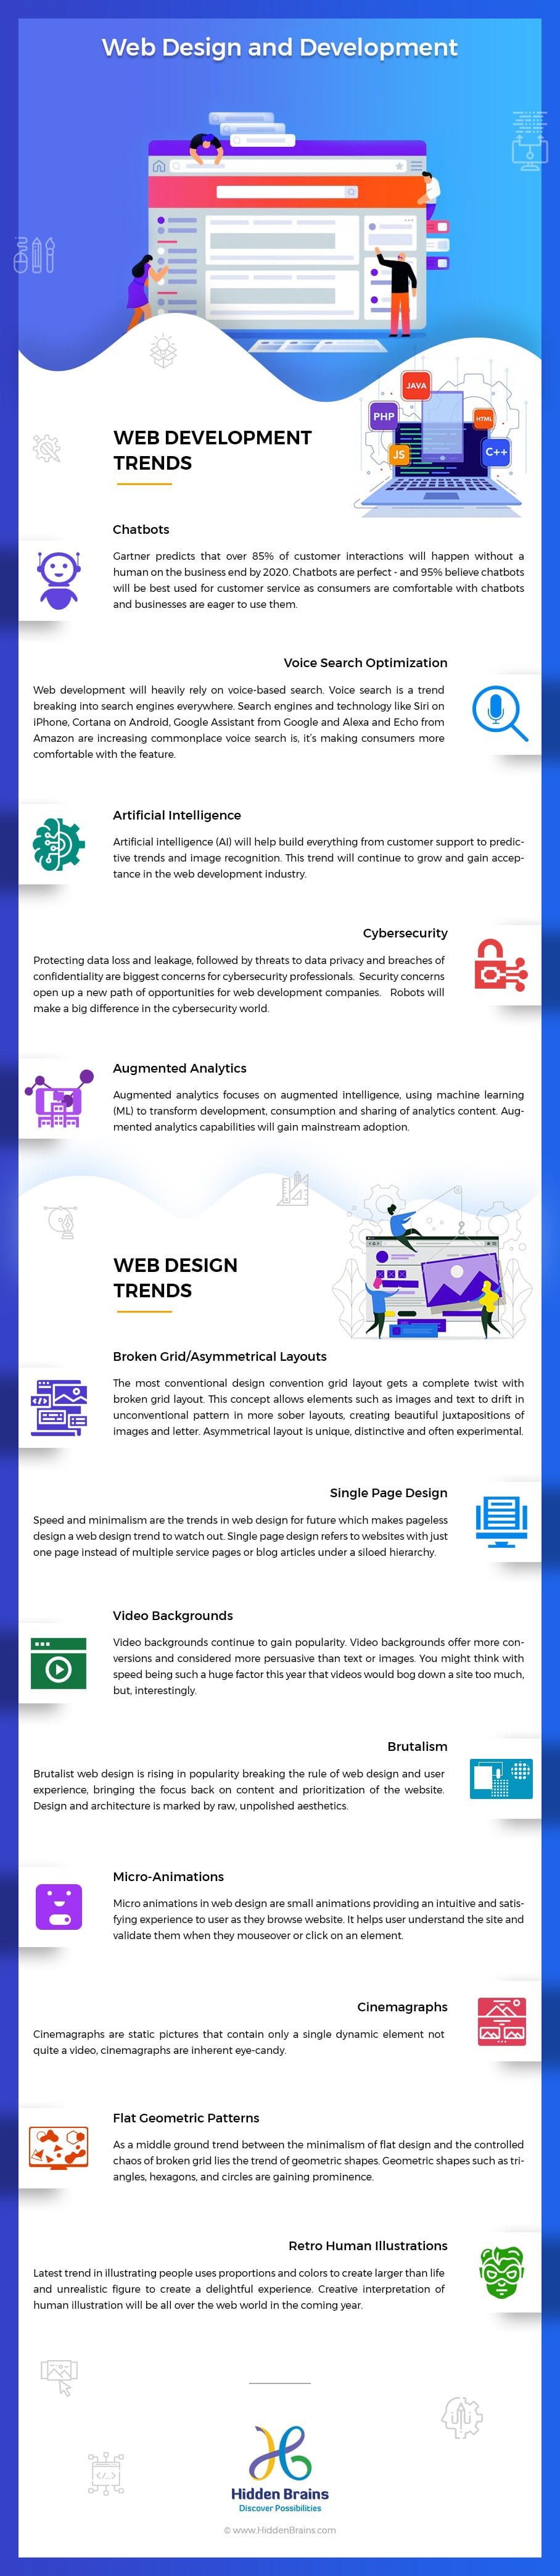 Web design and Development Trends